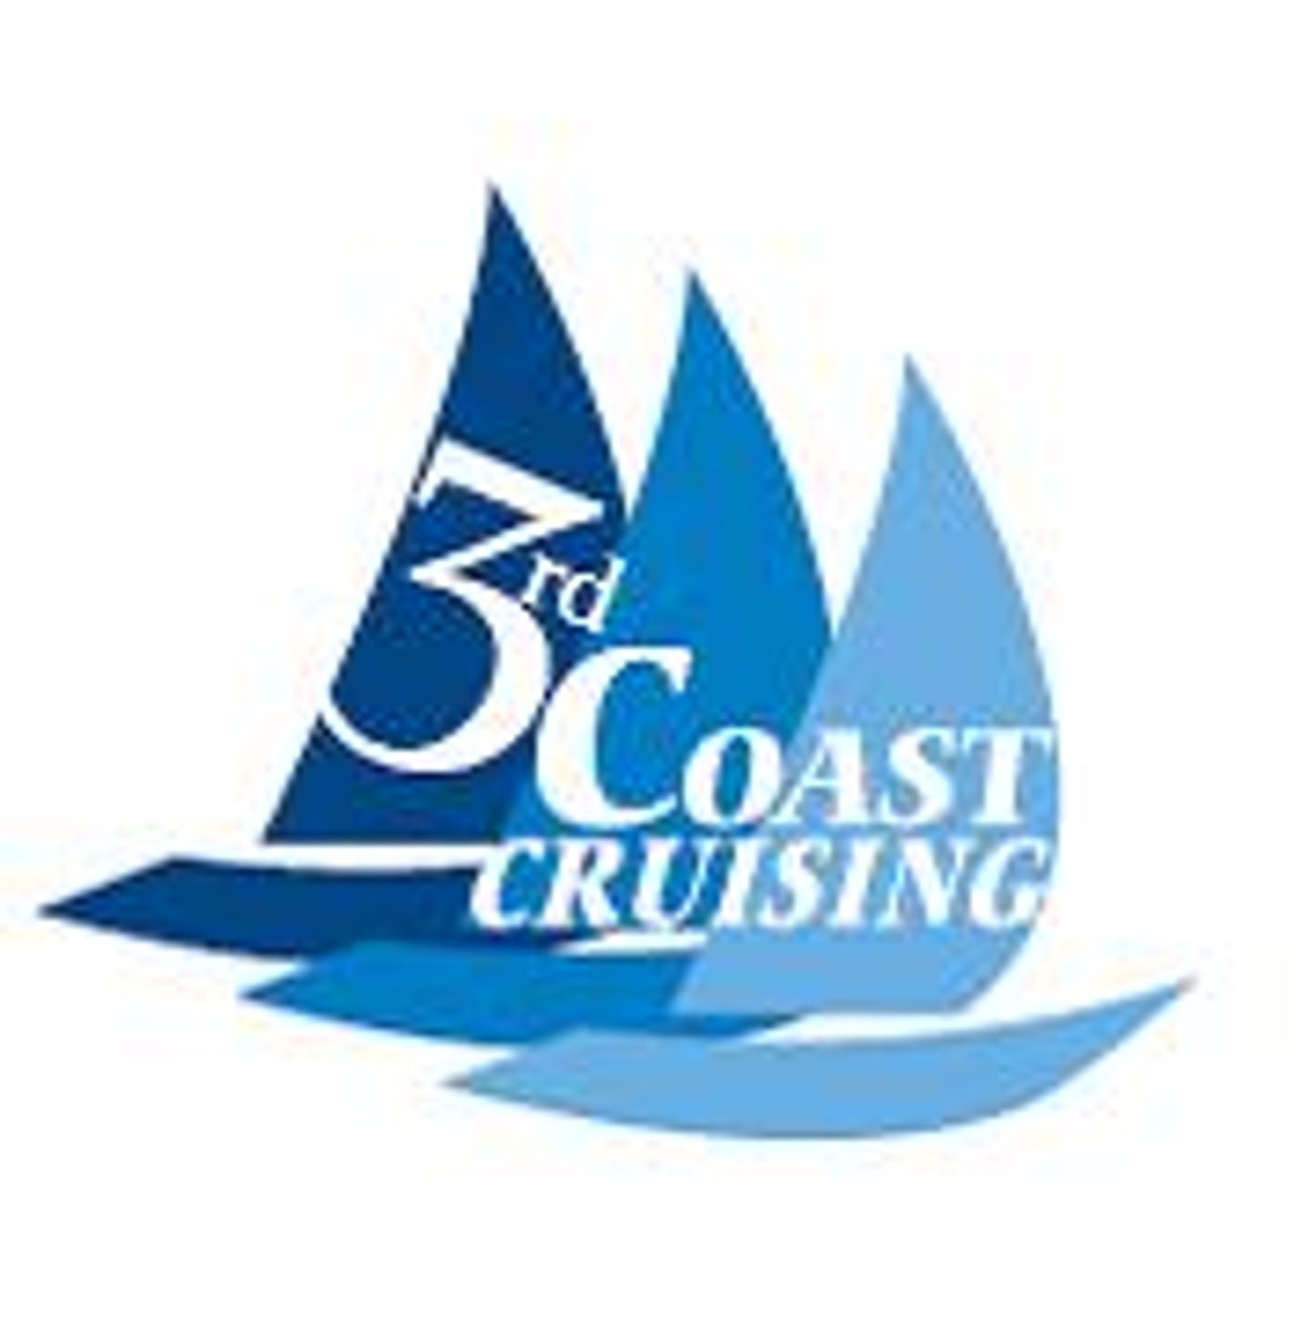 3rd Coast Cruising